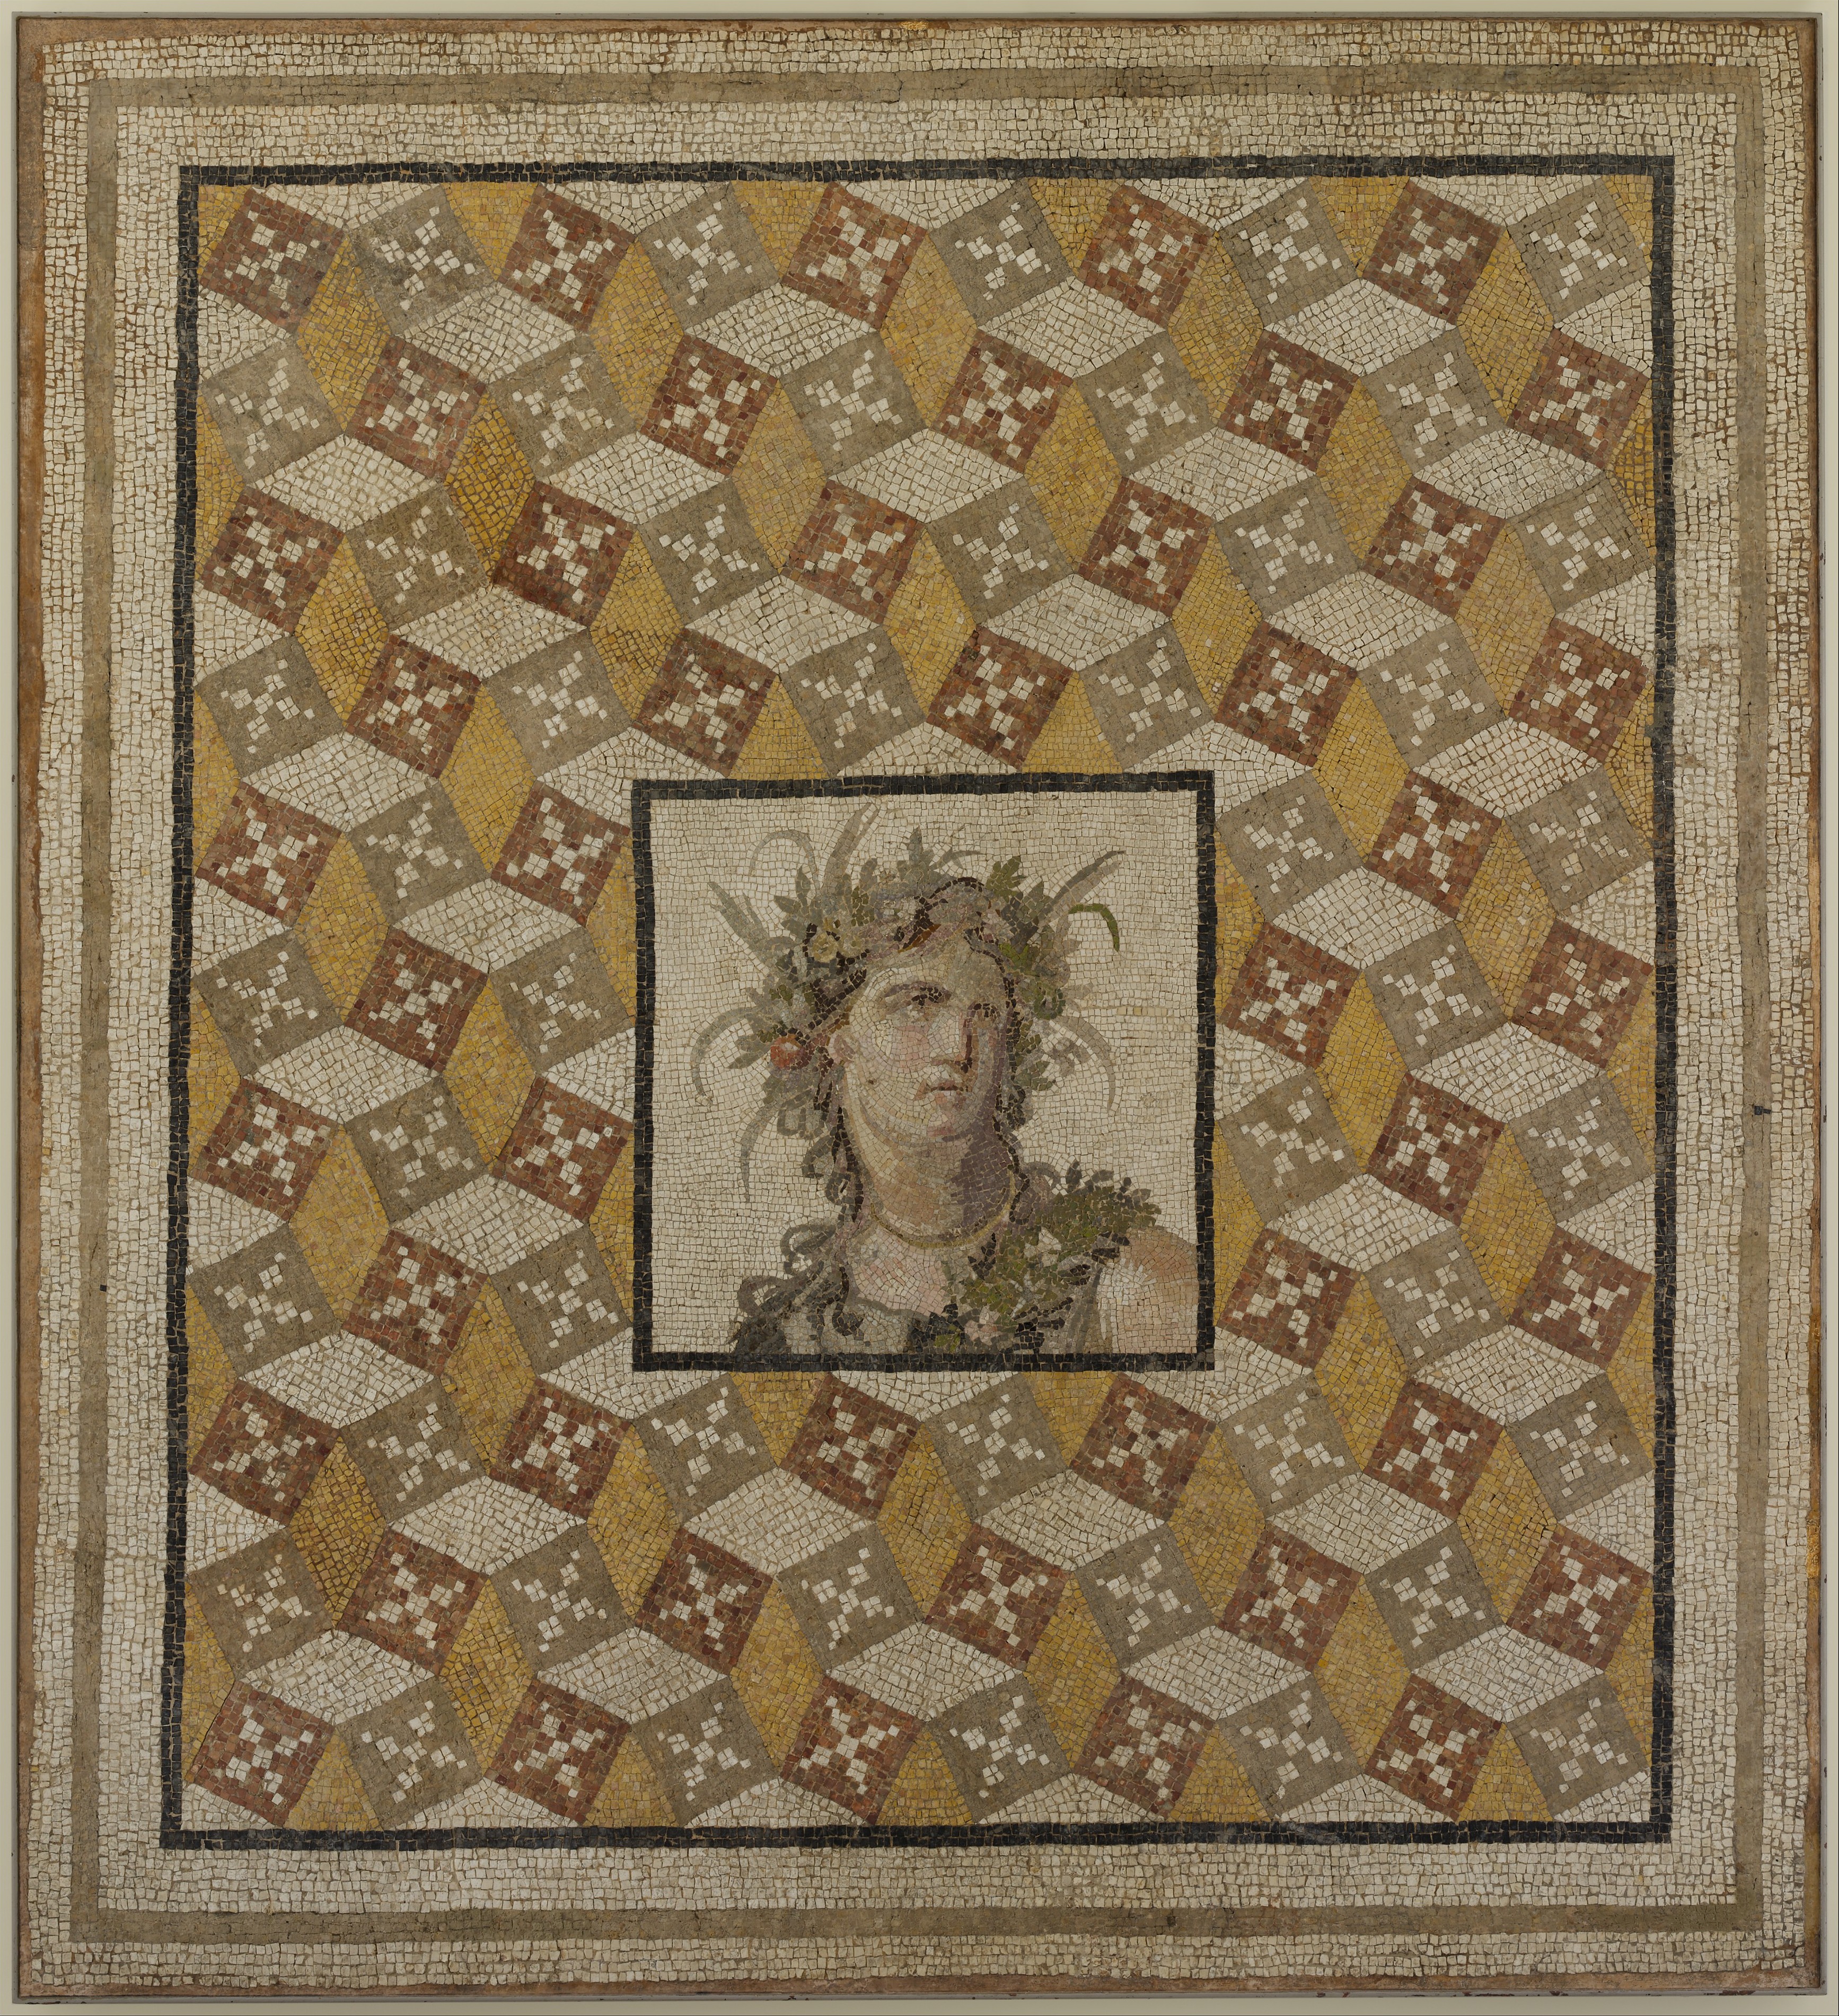 Mosaic floor panel | Roman | Imperial | The Metropolitan Museum of Art